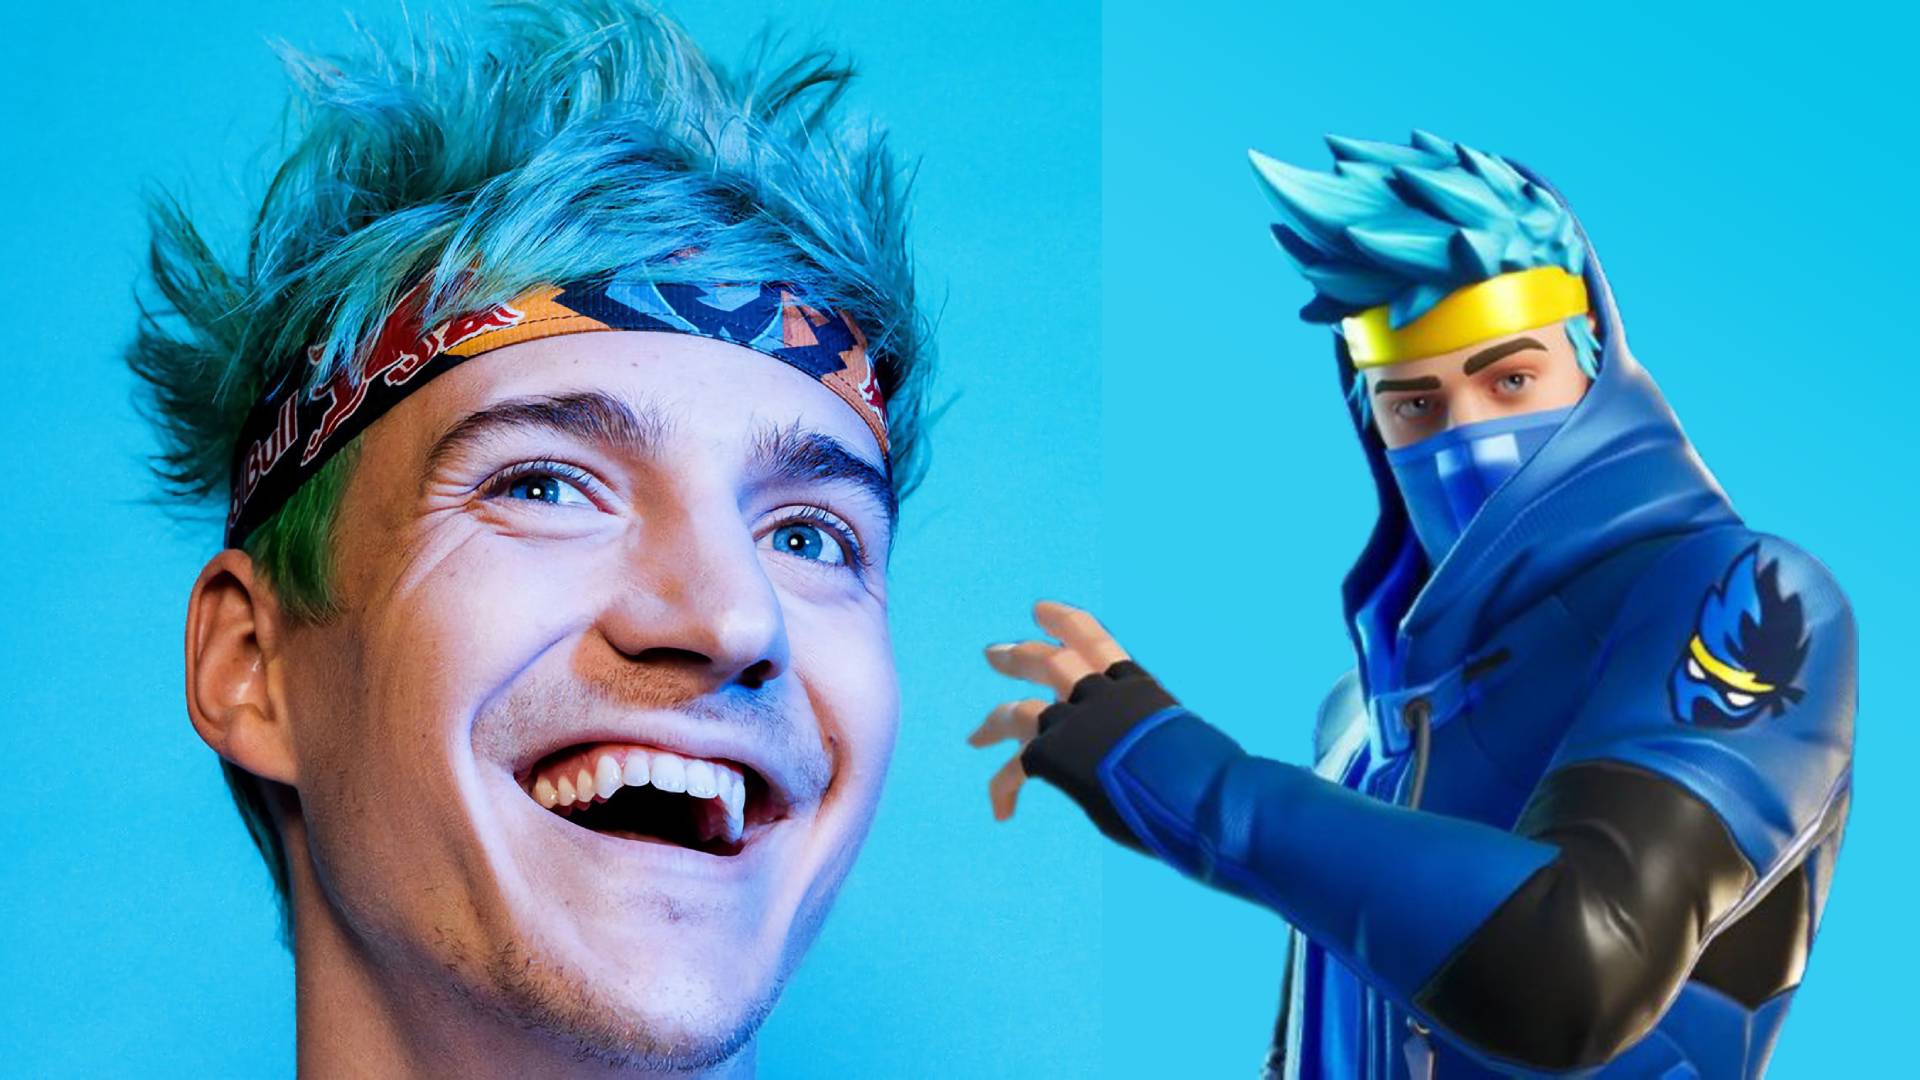 Blue Haired Ninja in Fortnite - wide 8